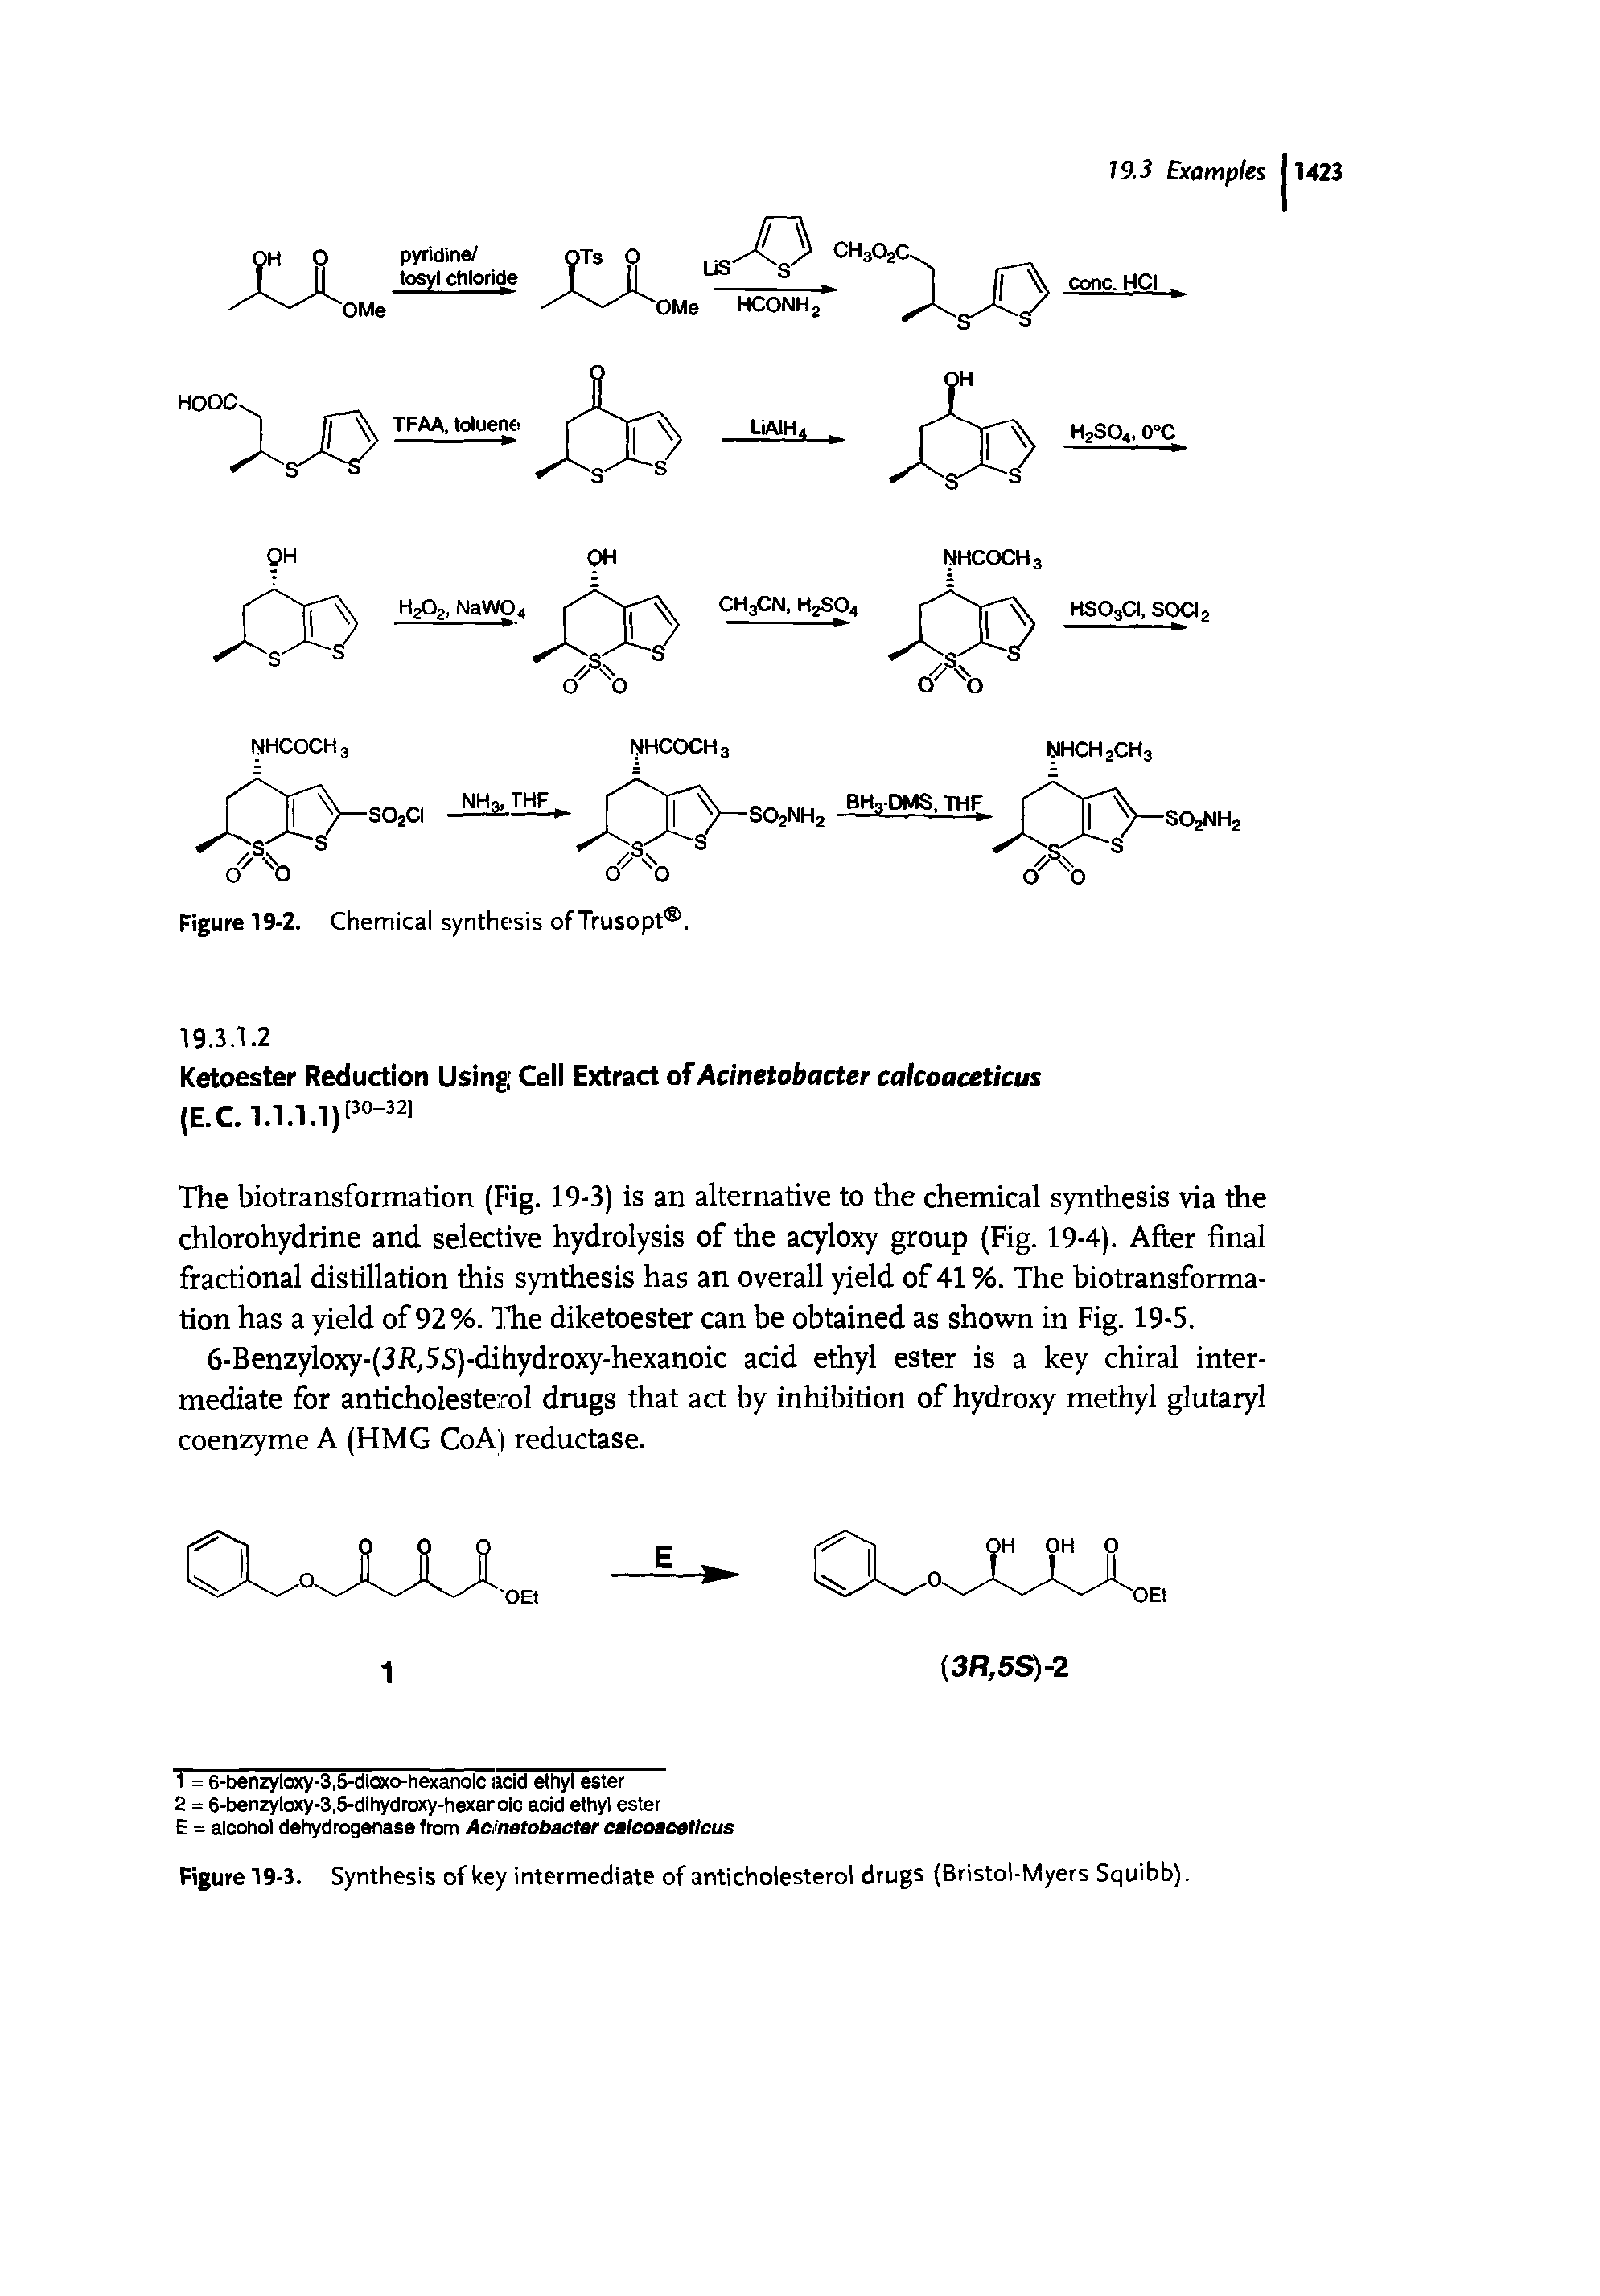 Figure 19-3. Synthesis of key intermediate of anticholesterol drugs (Bristol-Myers Squibb).